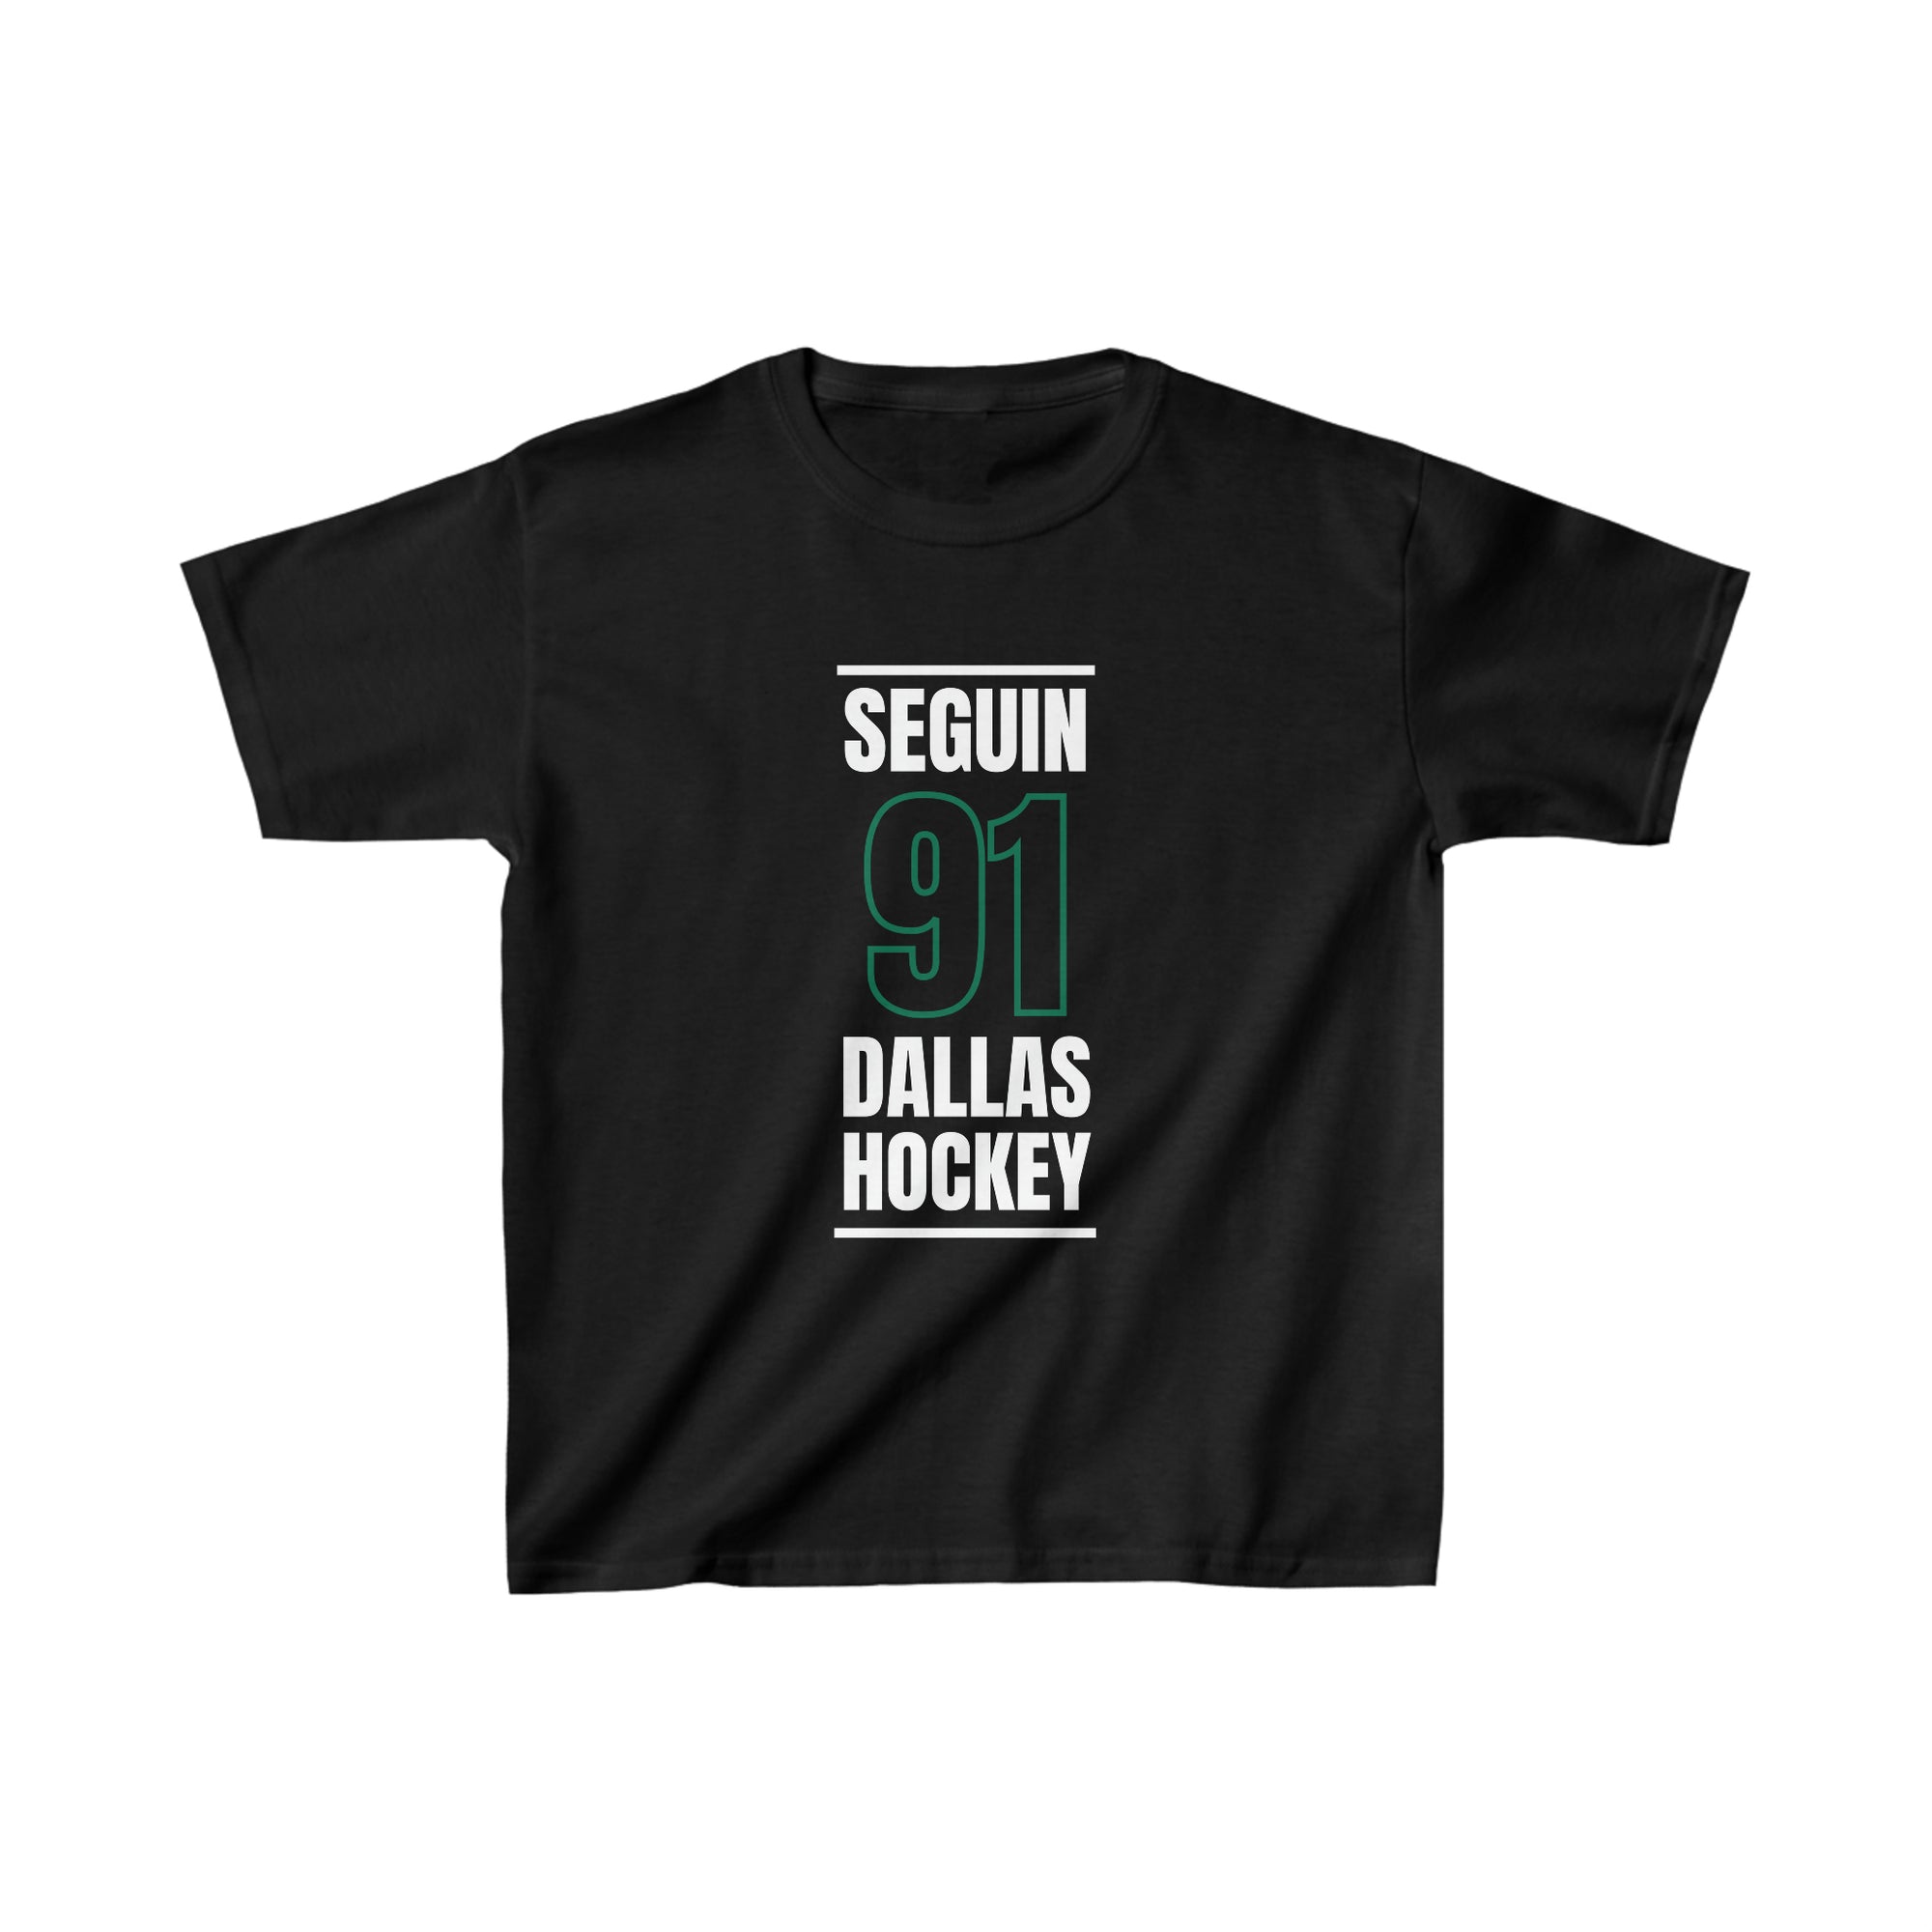 Seguin 91 Dallas Hockey Black Vertical Design Kids Tee